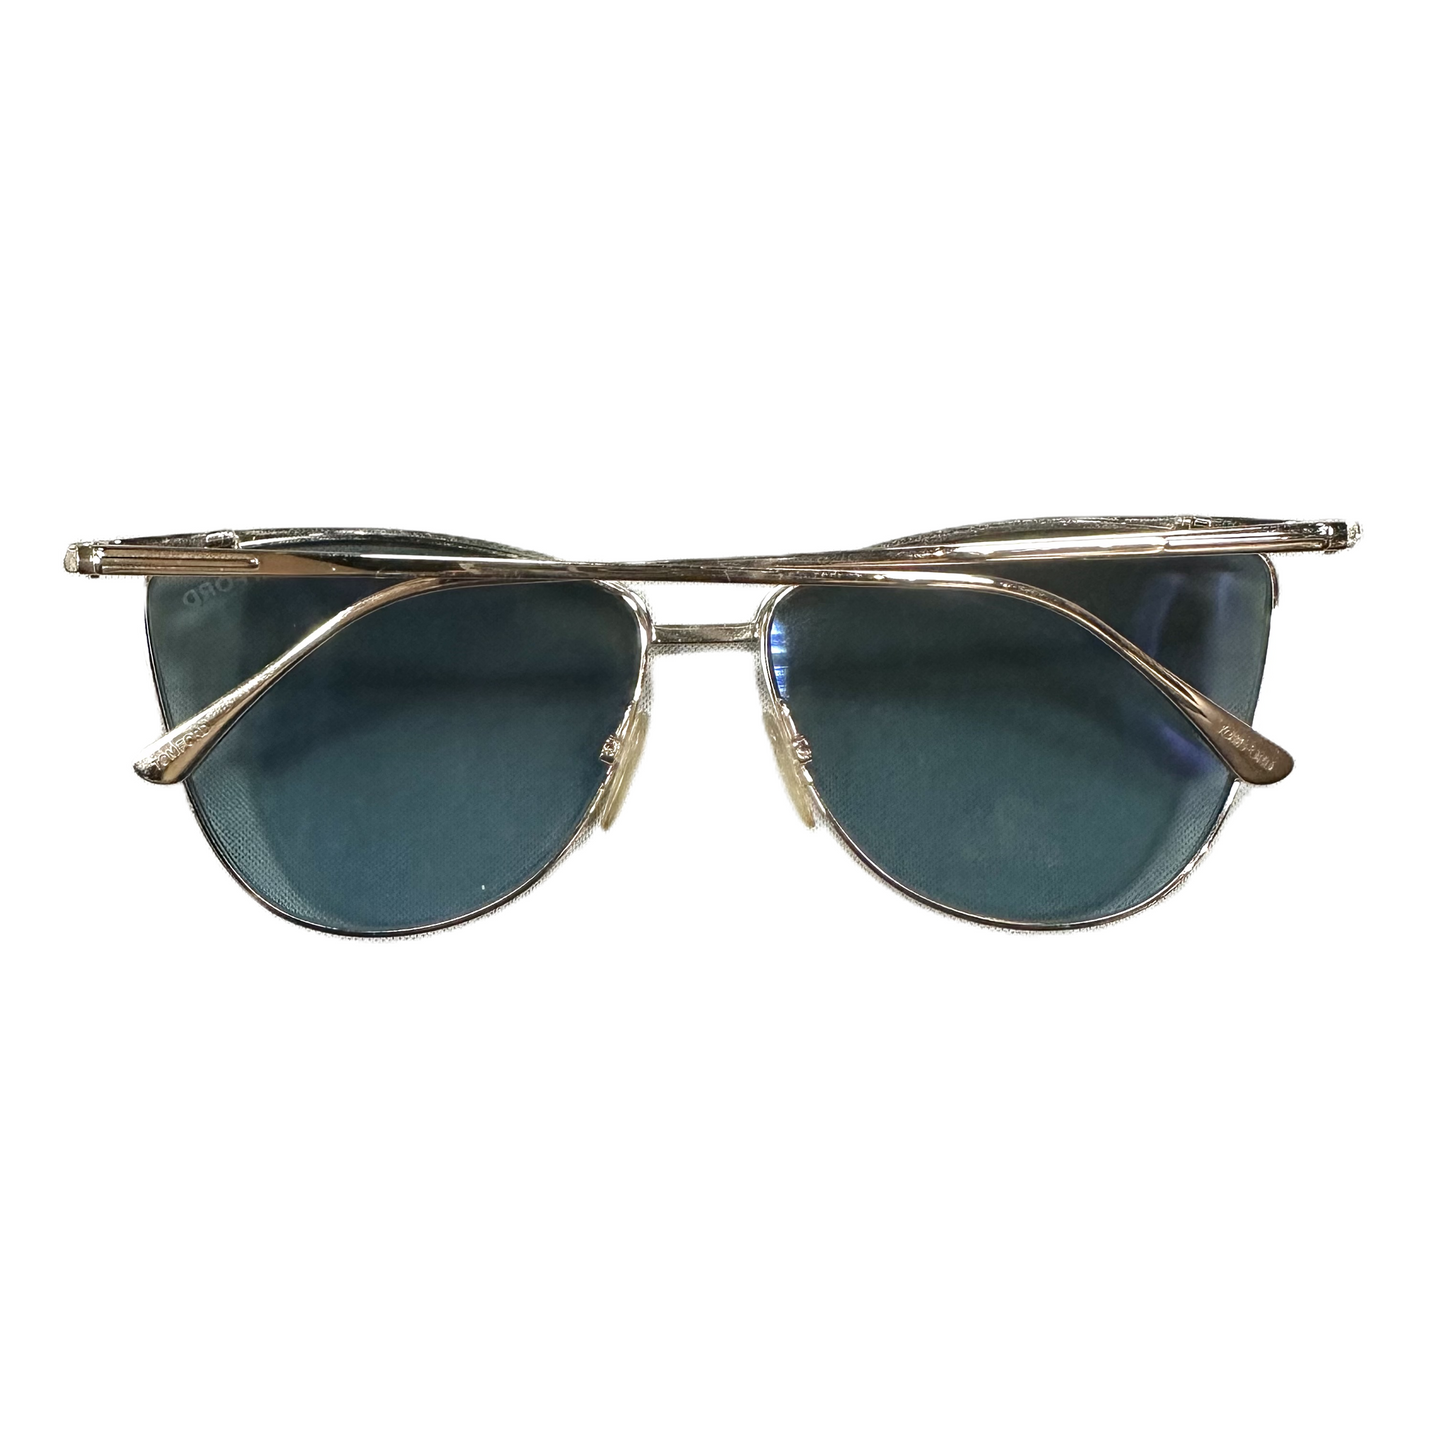 Sunglasses Designer By Tom Ford